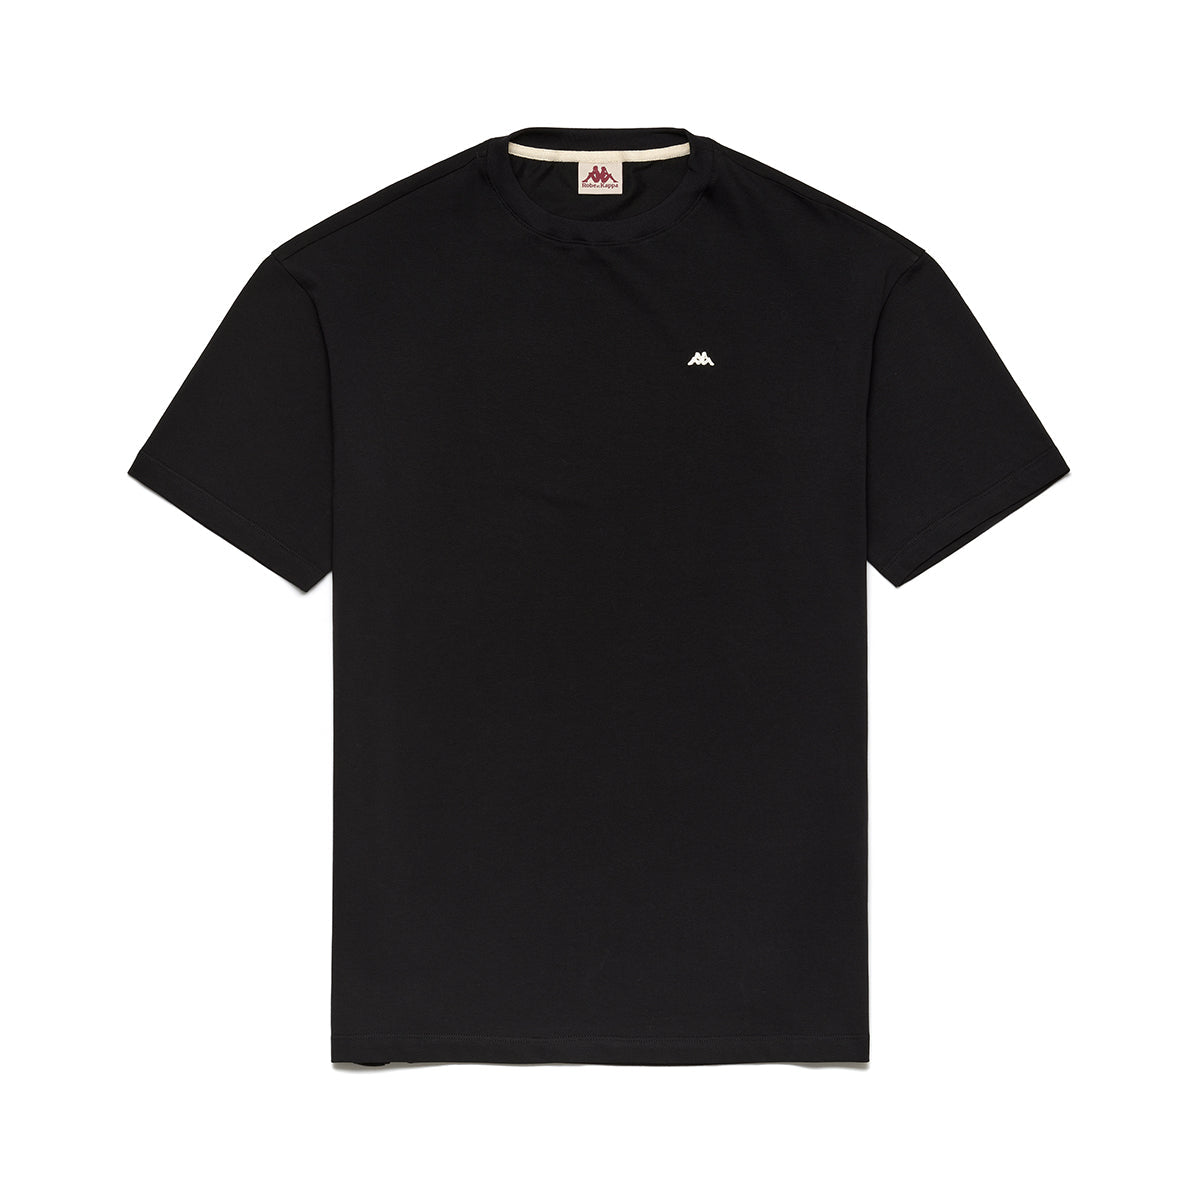 Camiseta Darphis negro unisexe - Imagen 1